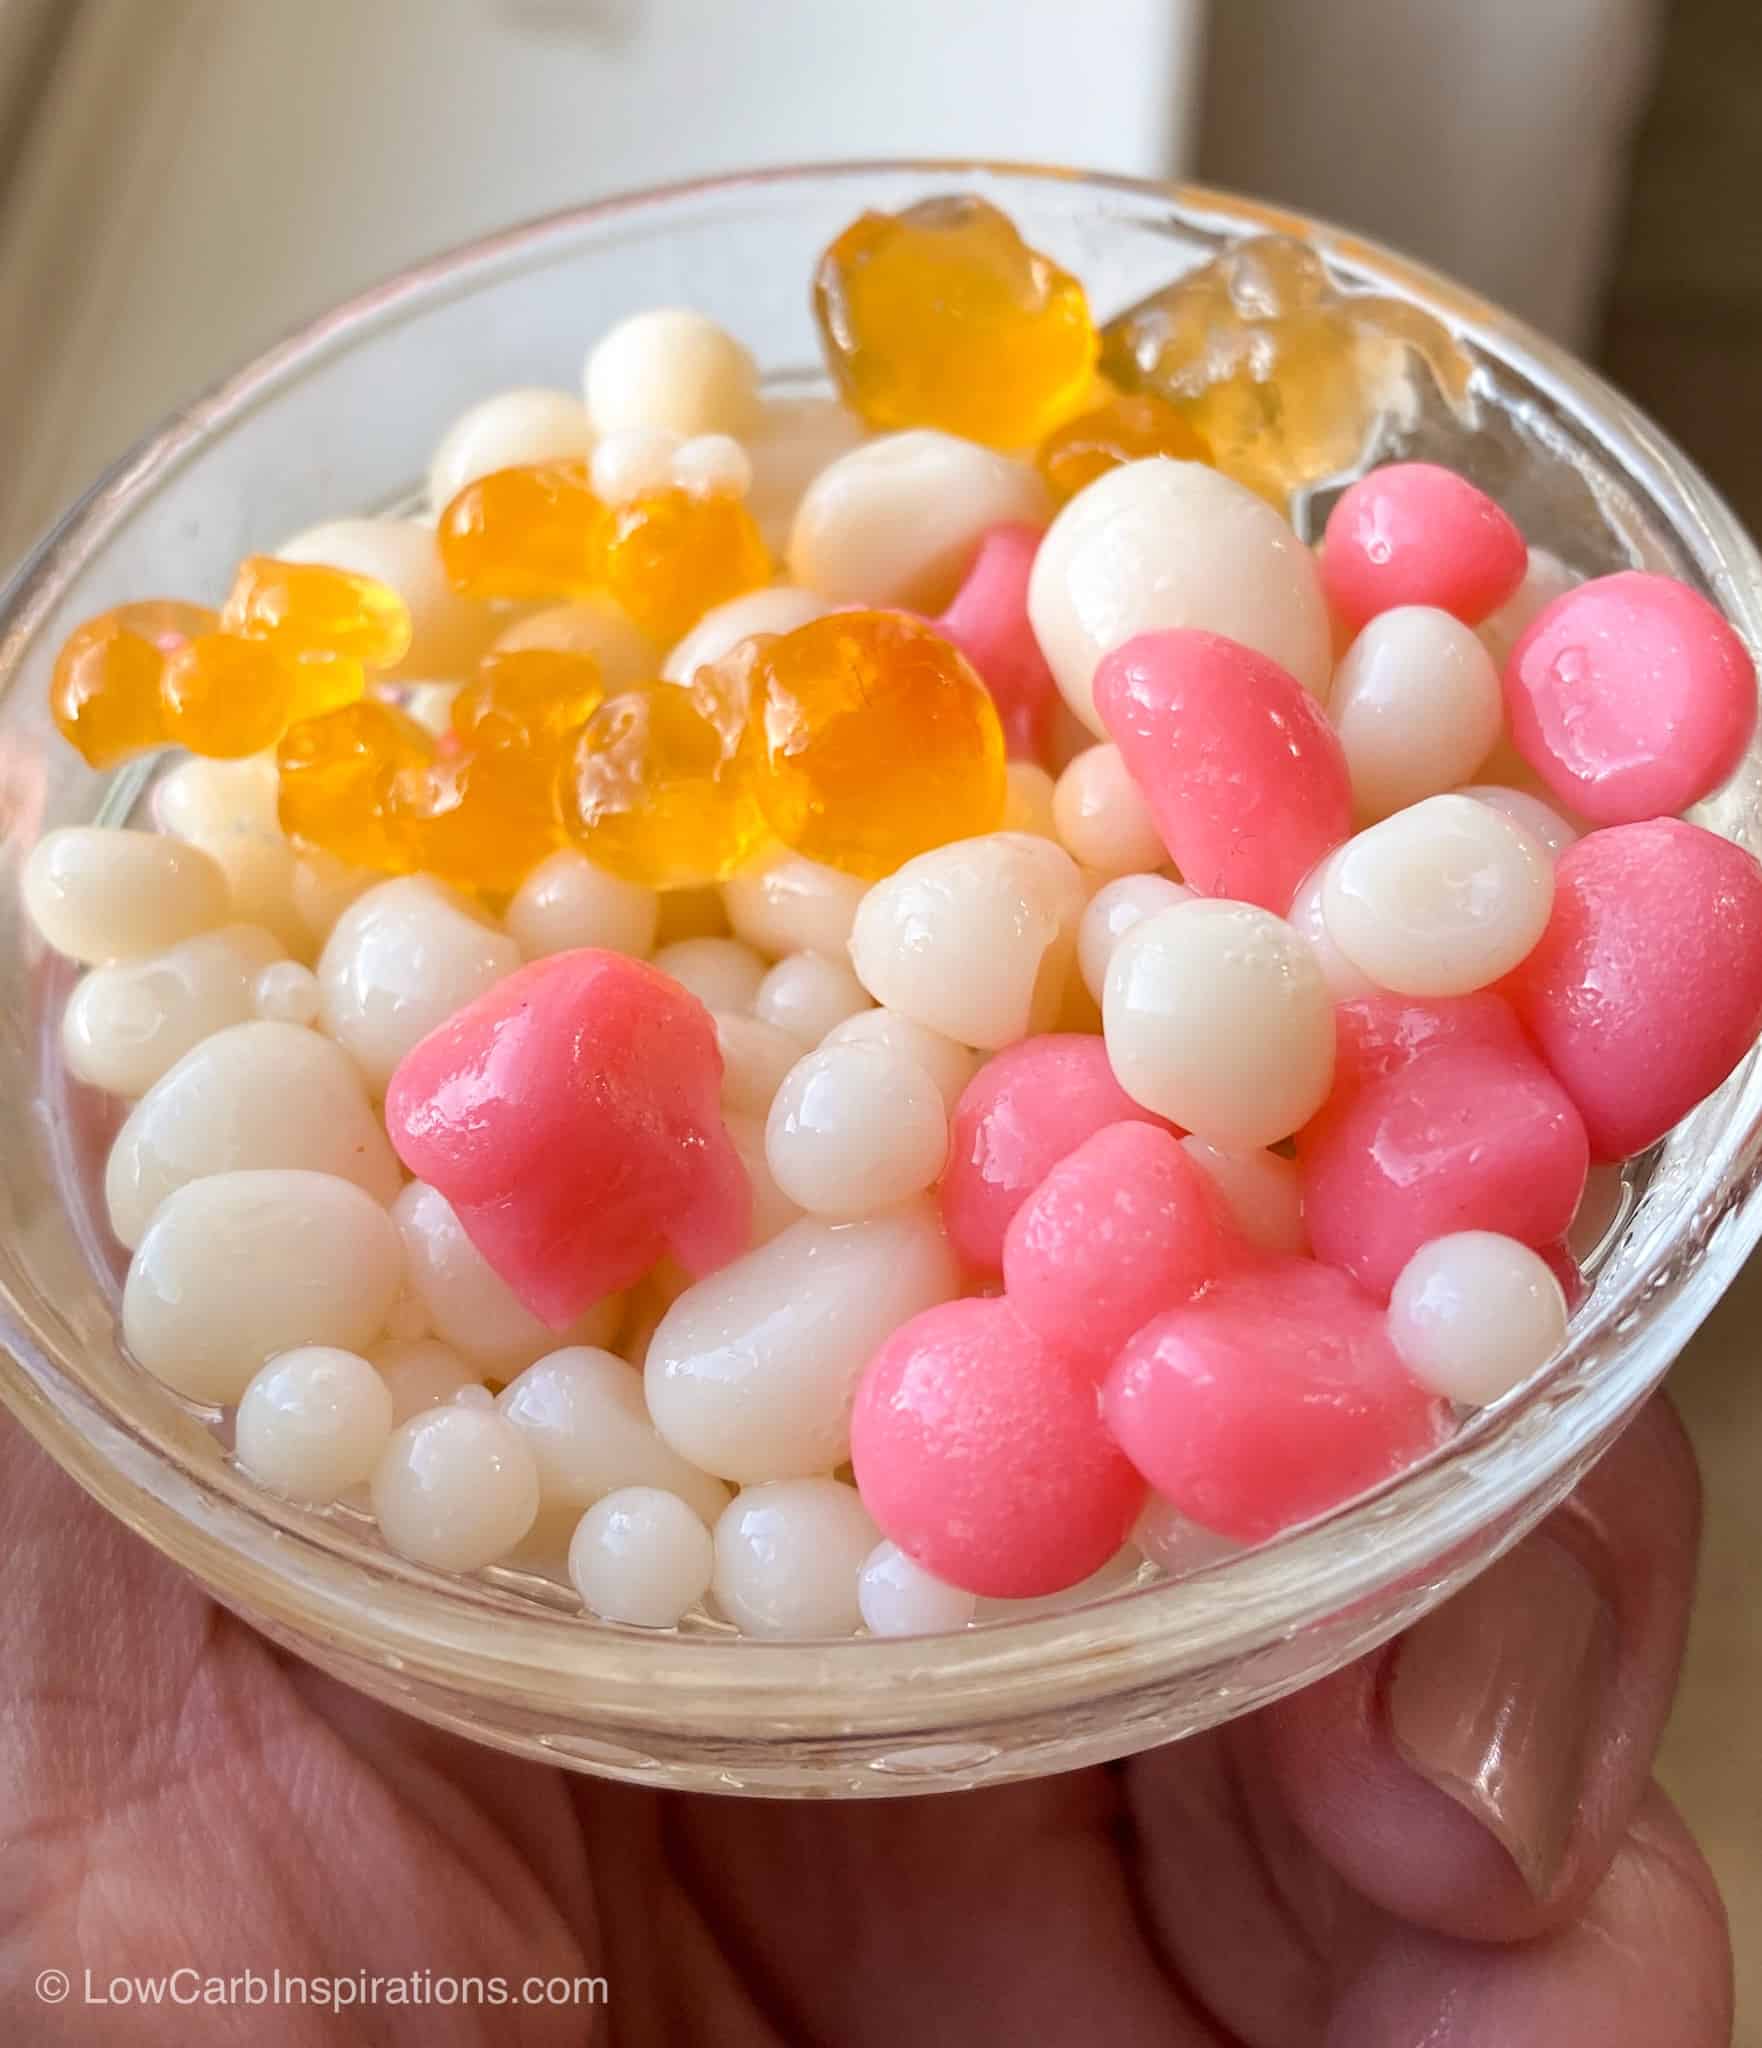 Edible Spheres Experiment for Kids - Keto Friendly Recipe!